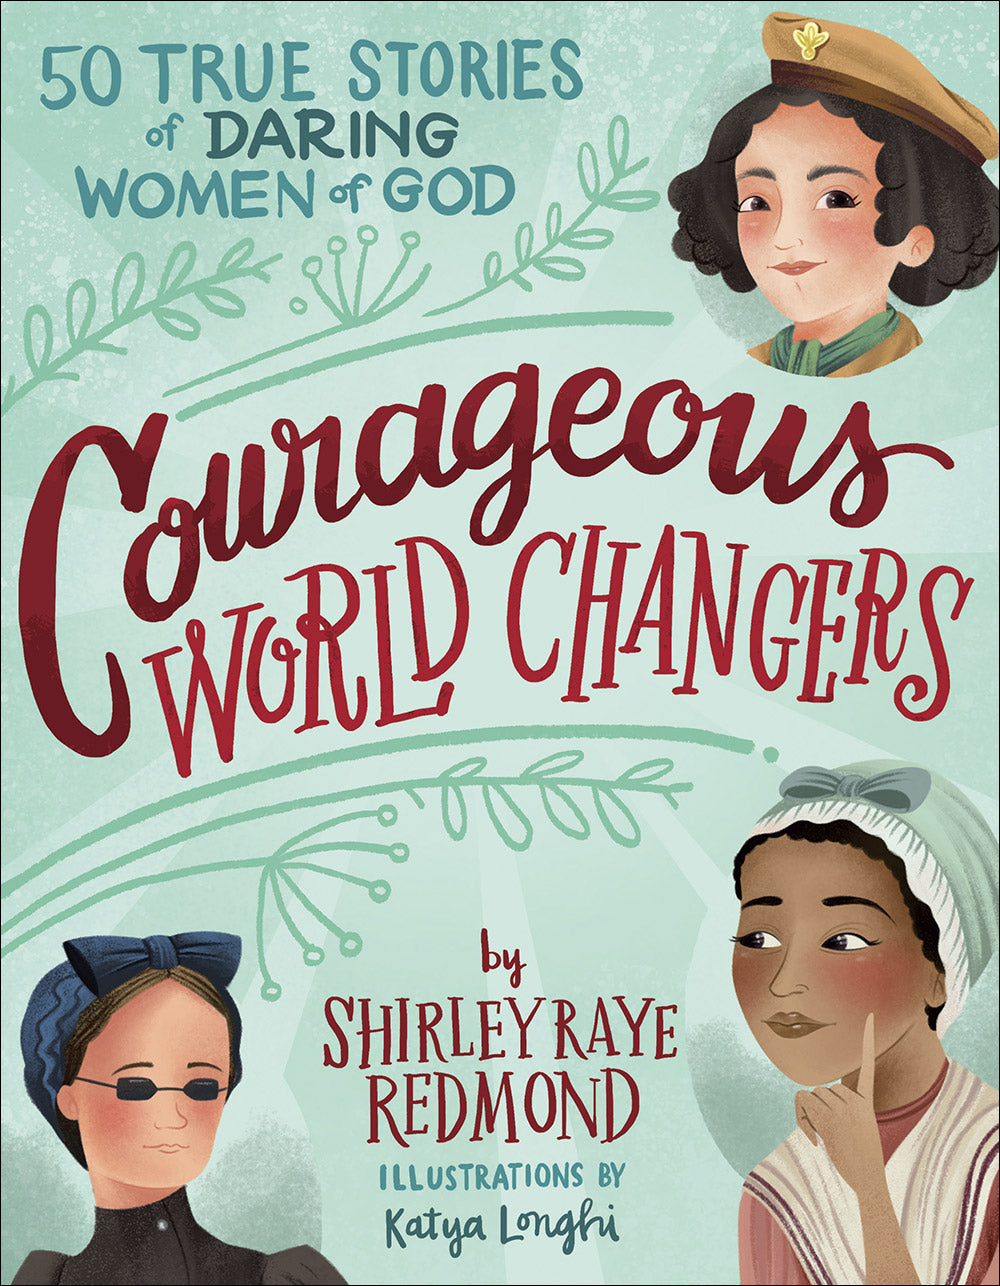 Courageous World Changers : 50 True Stories of Daring Women of God